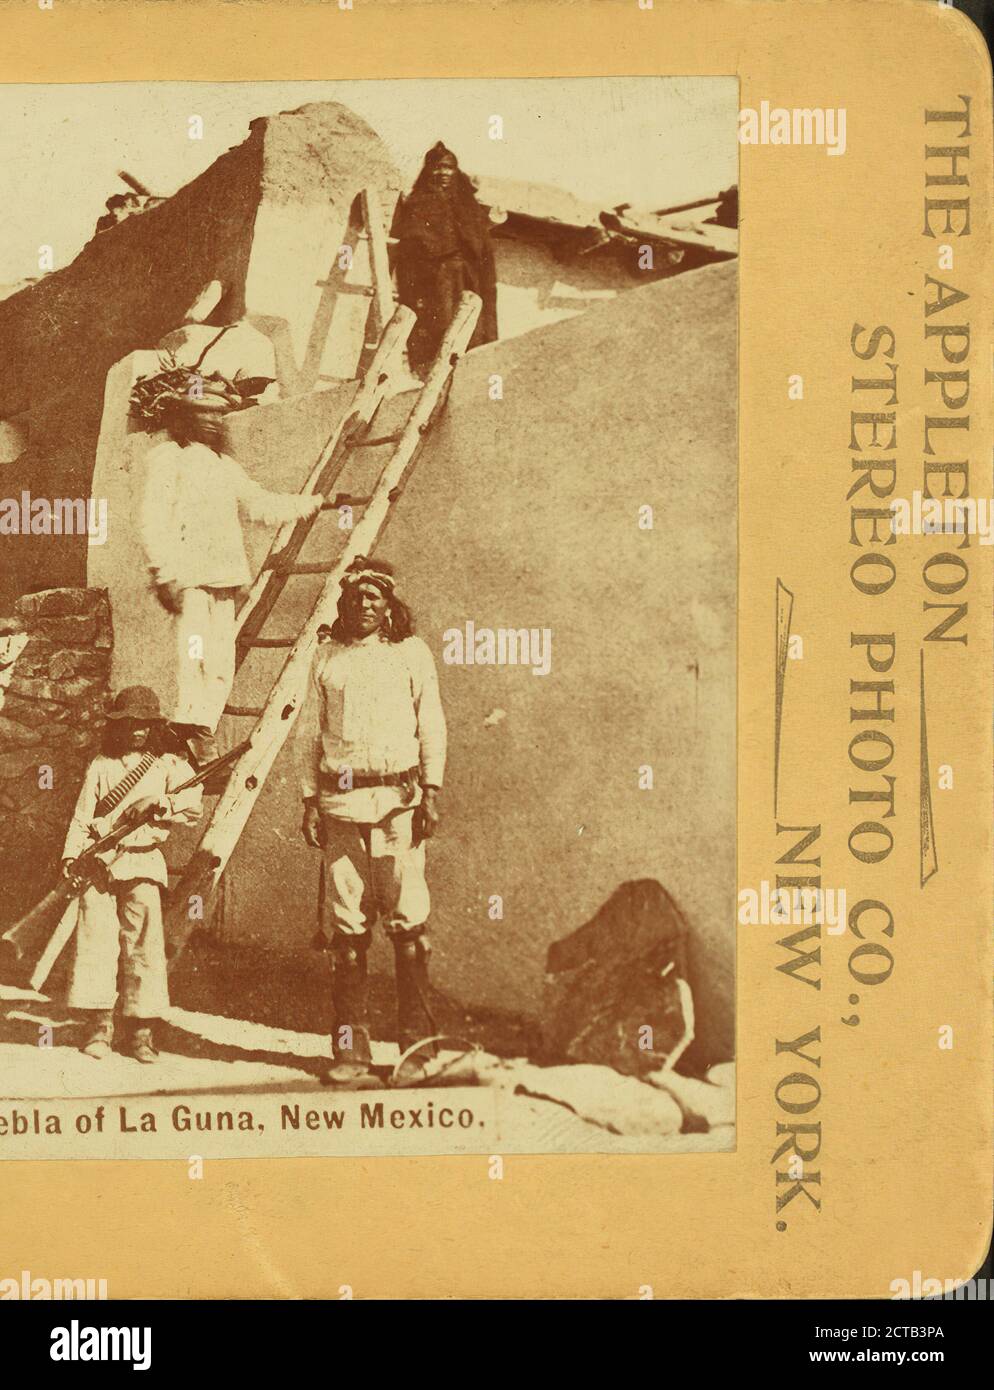 The Indian Puebla of La Guna, New Mexico., Appleton Stereo Photo Co., Indians of North America, Pueblo Indians, Dwellings, New Mexico, Pueblo of Laguna, New Mexico Stock Photo